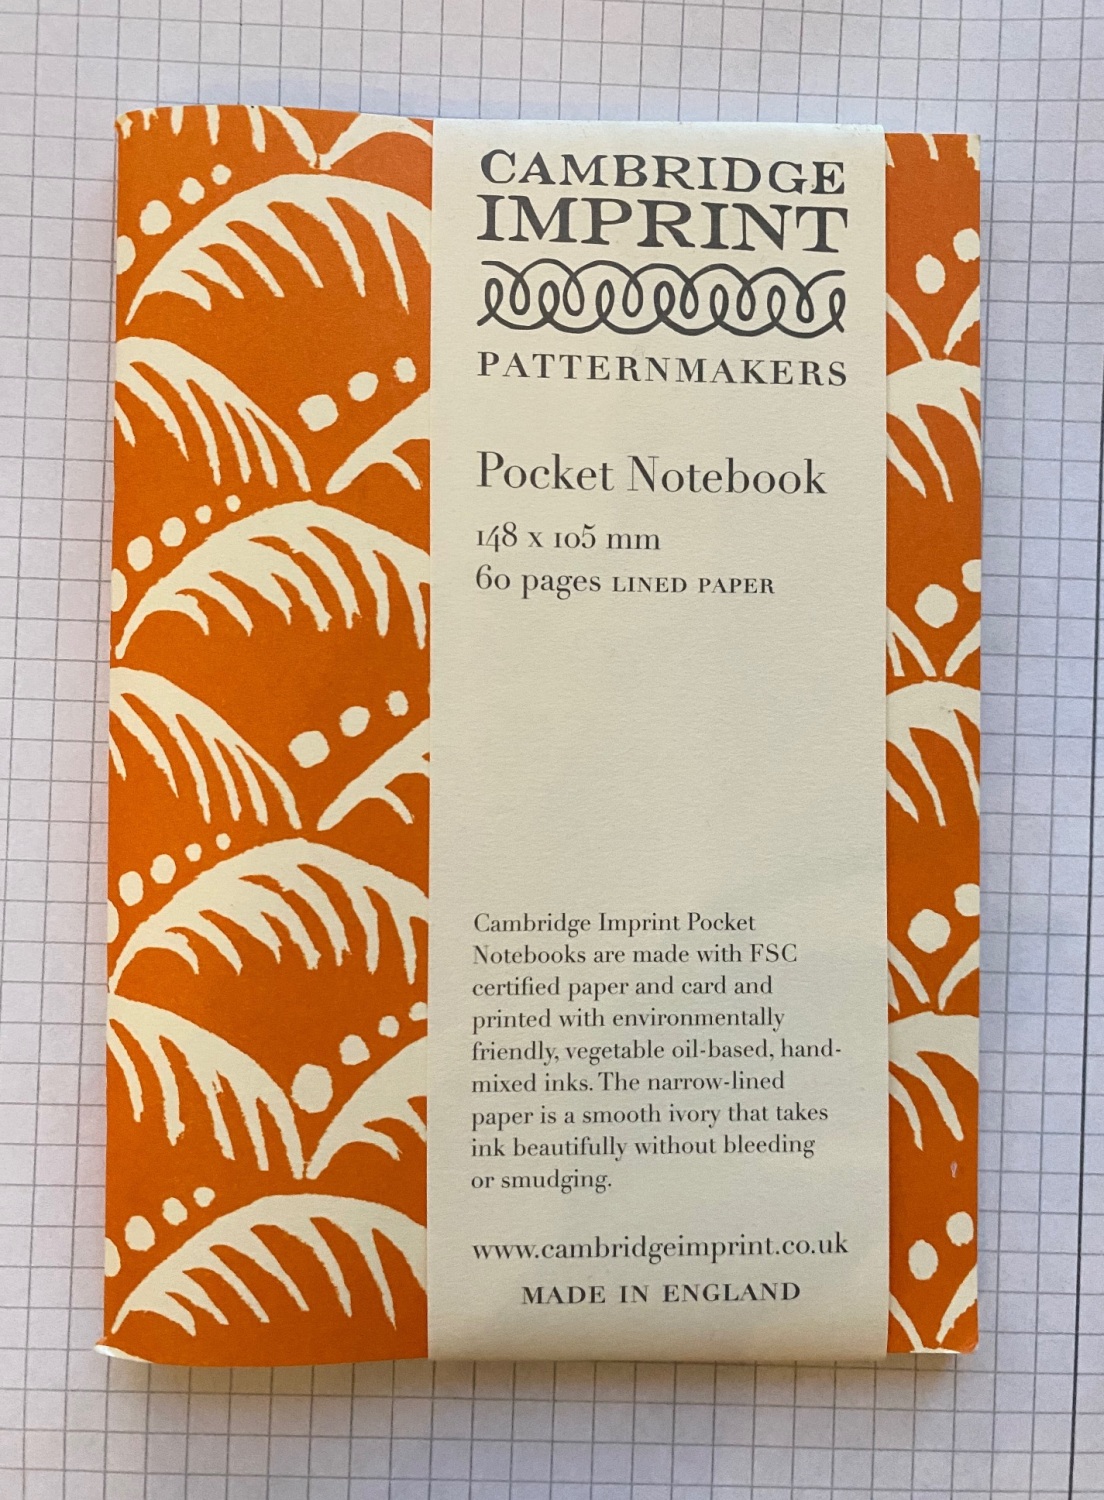 Cambridge imprint pocket notebook in orange